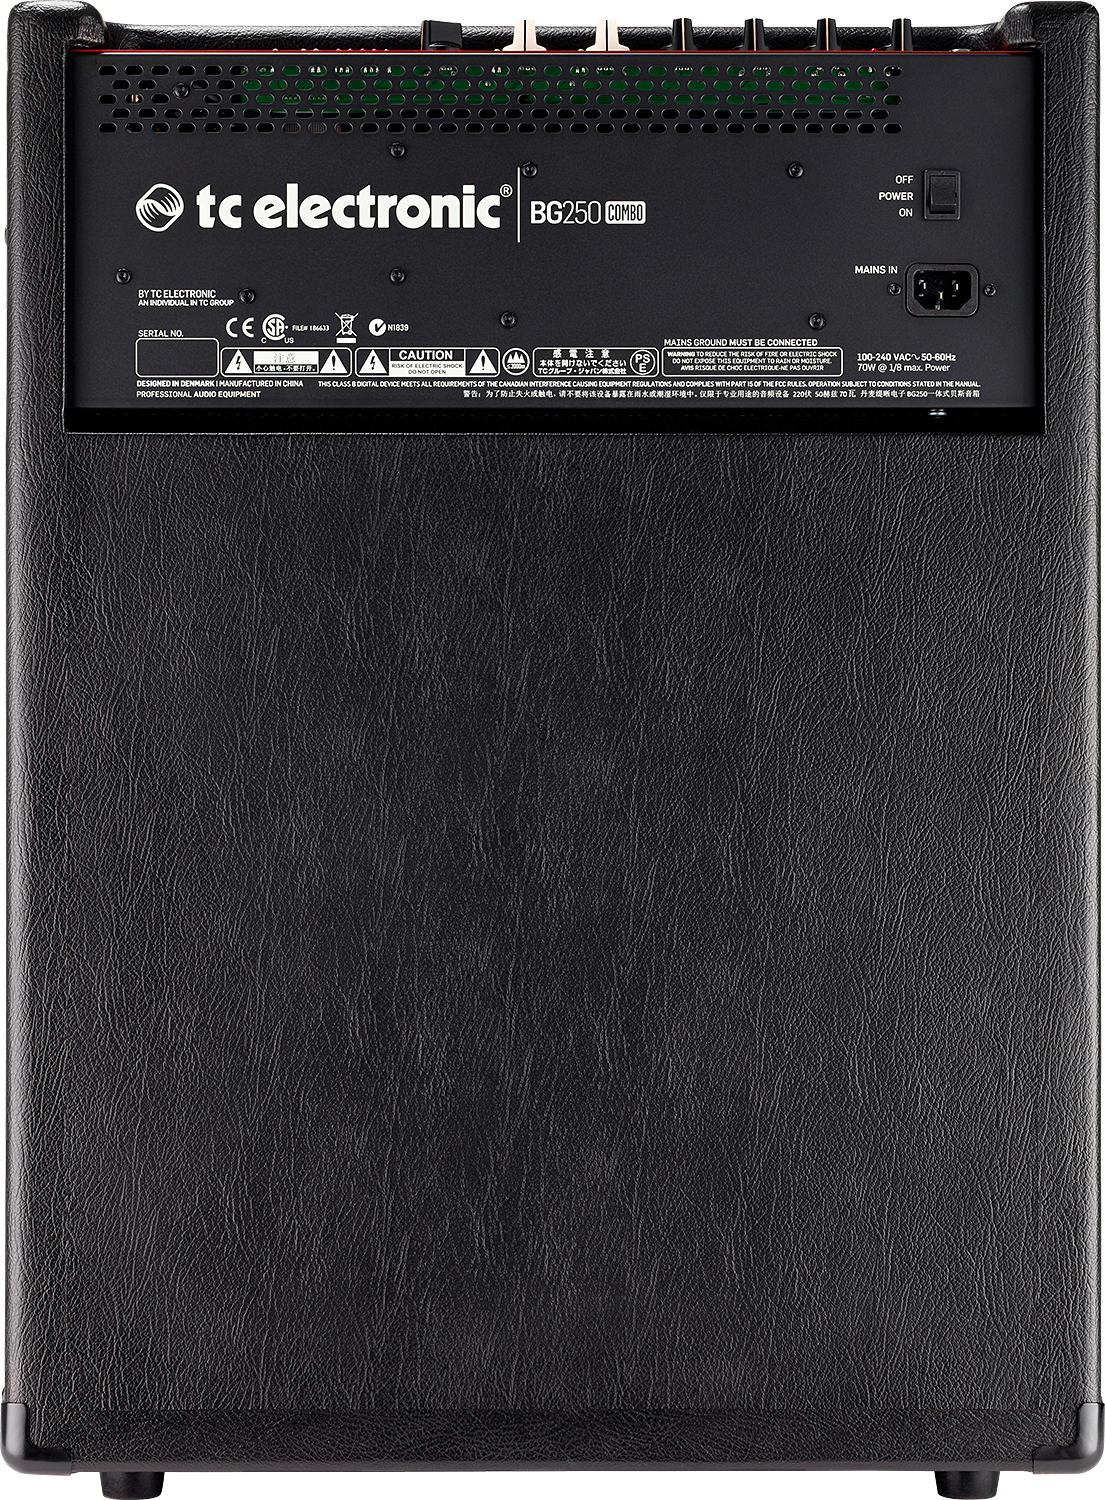 Tc Electronic Bg250 115 Mkii 2013 250w 1x15 - Bass combo amp - Variation 1